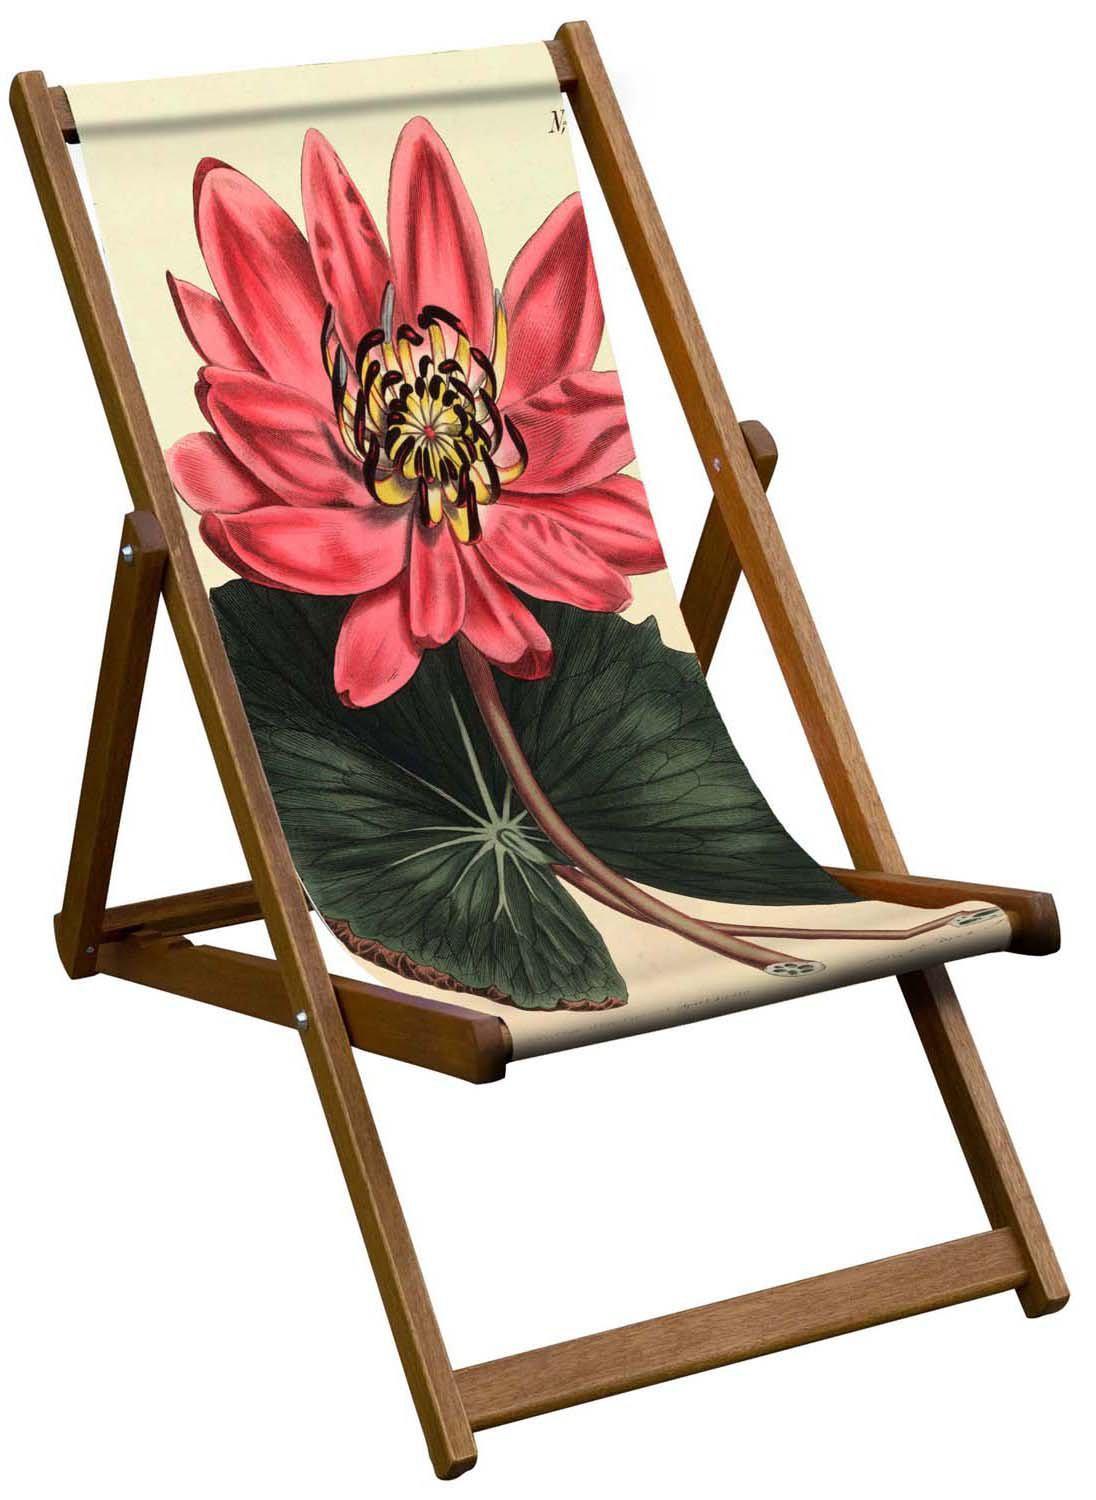 Red - Flowered Water lily - Nymphaea Rubra - Botanicals Design Deckchair